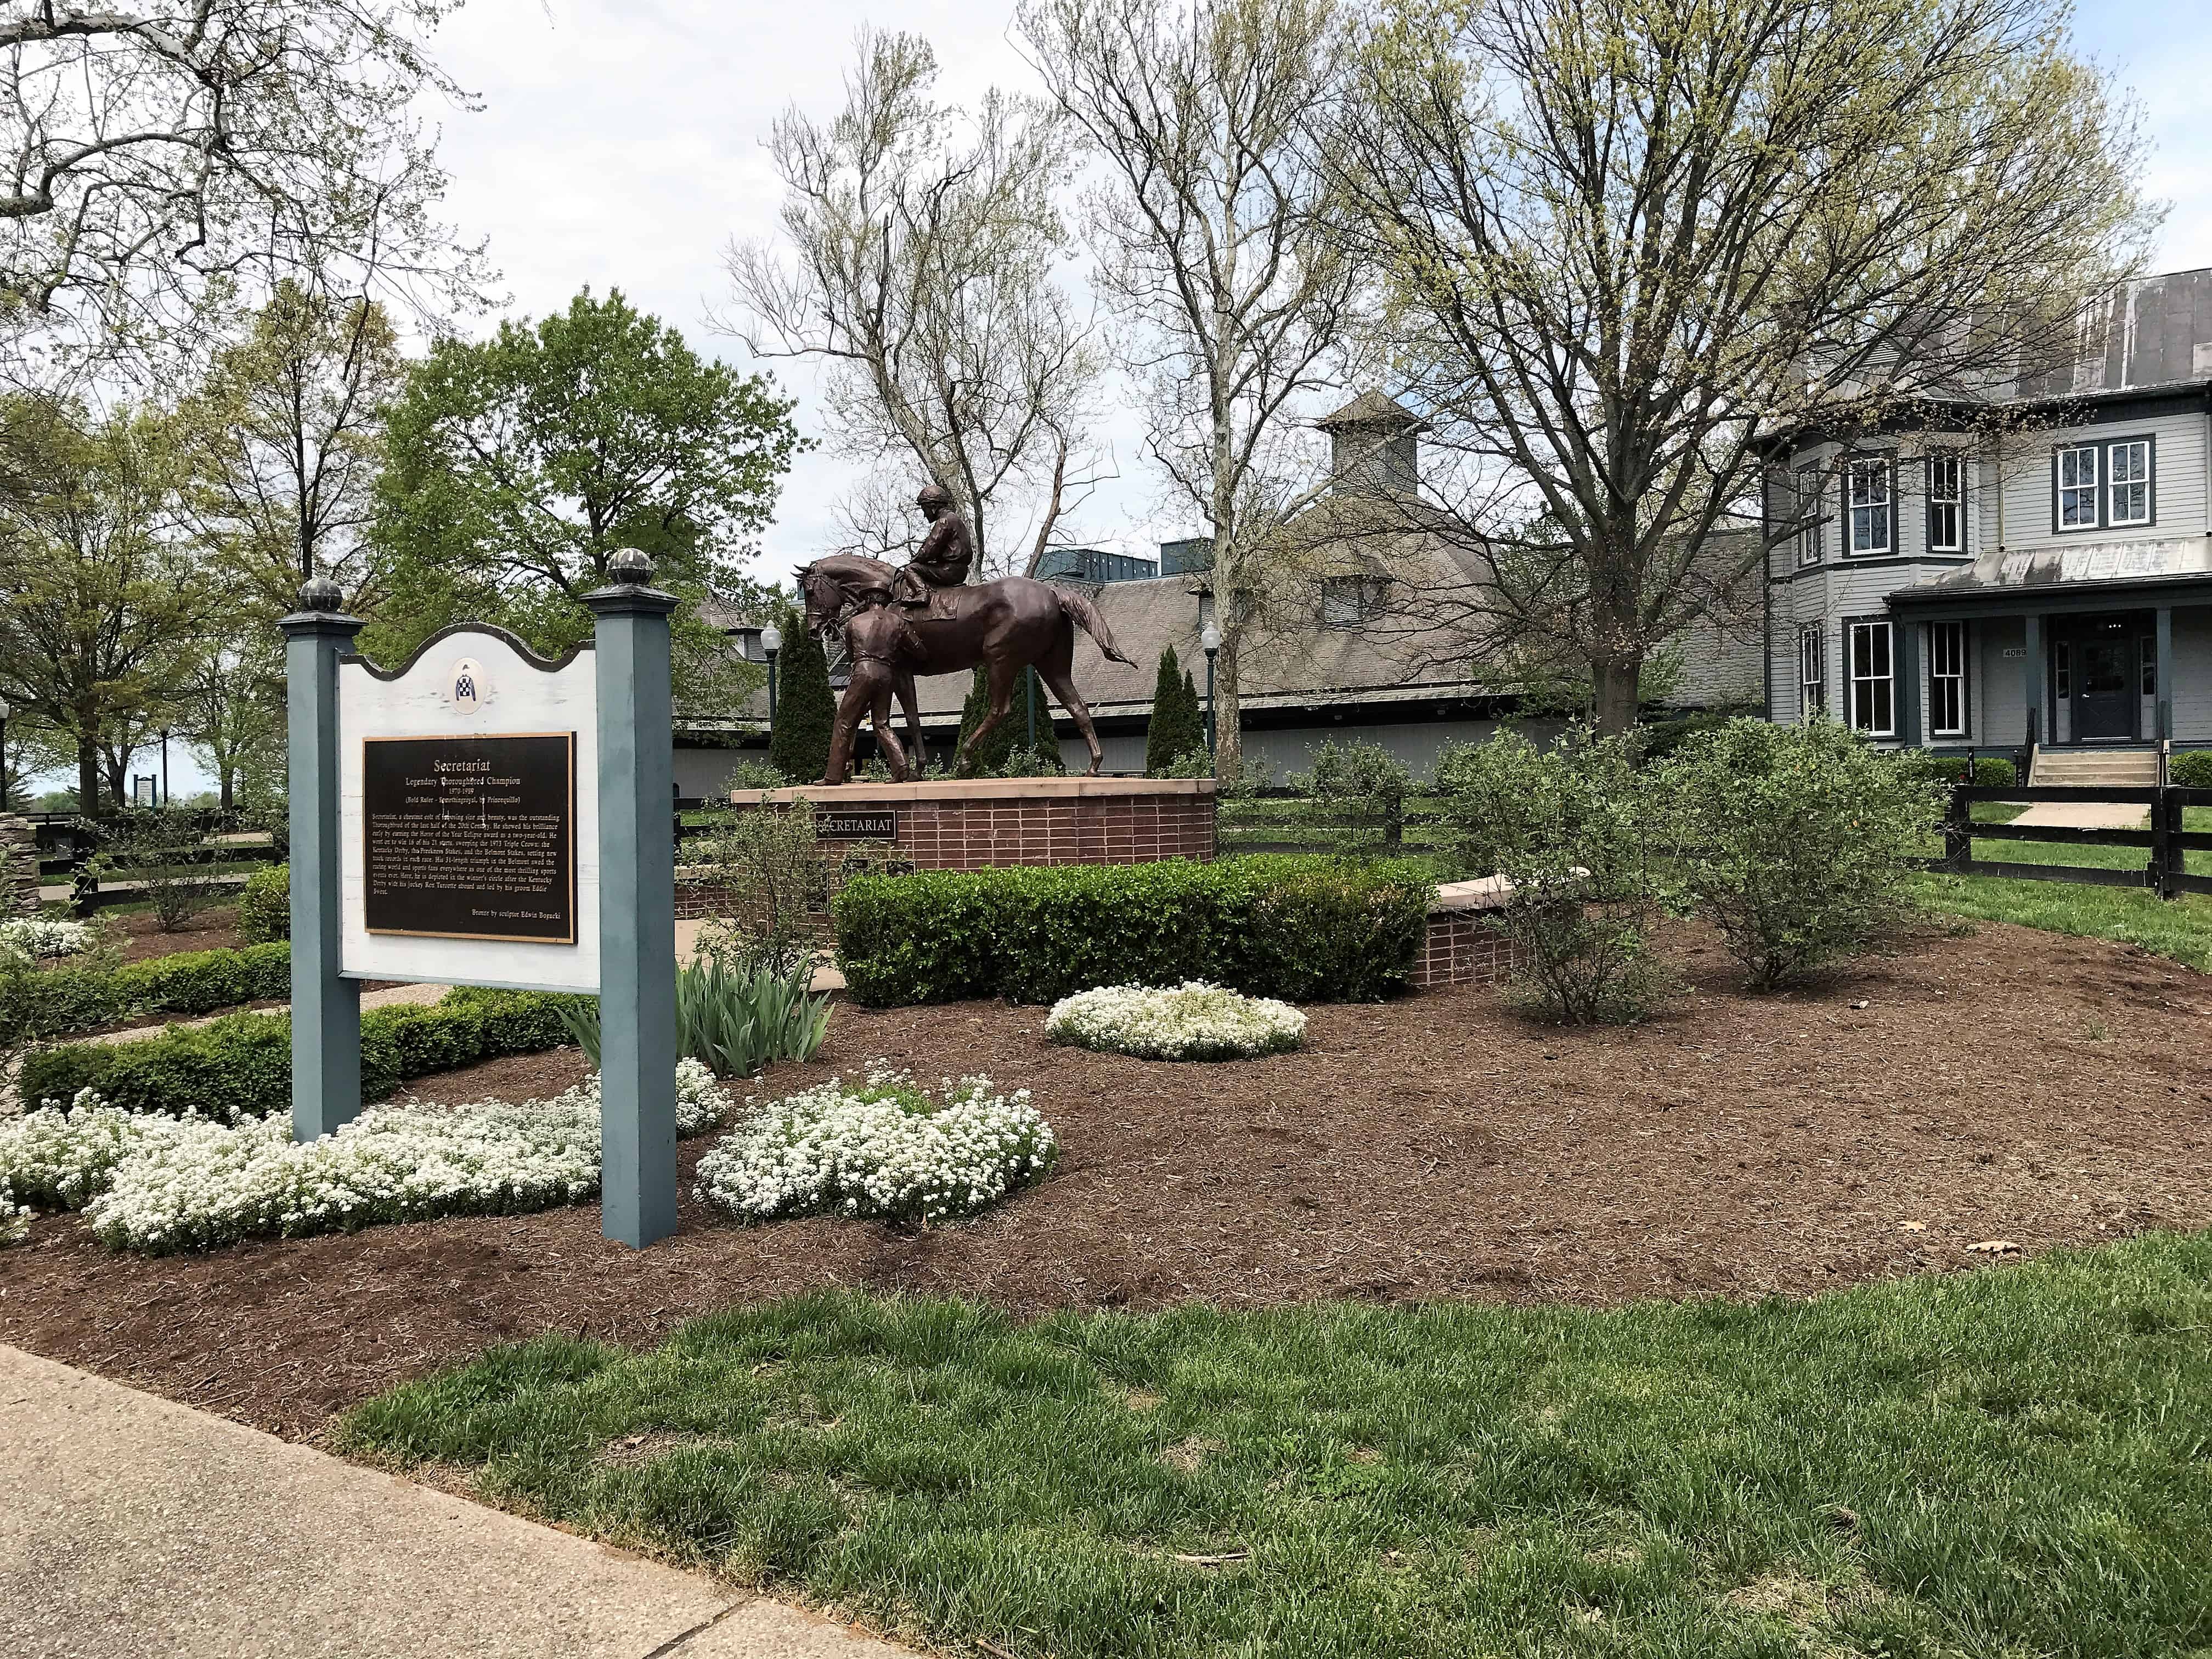 Secretariat statue at the Kentucky Horse Park